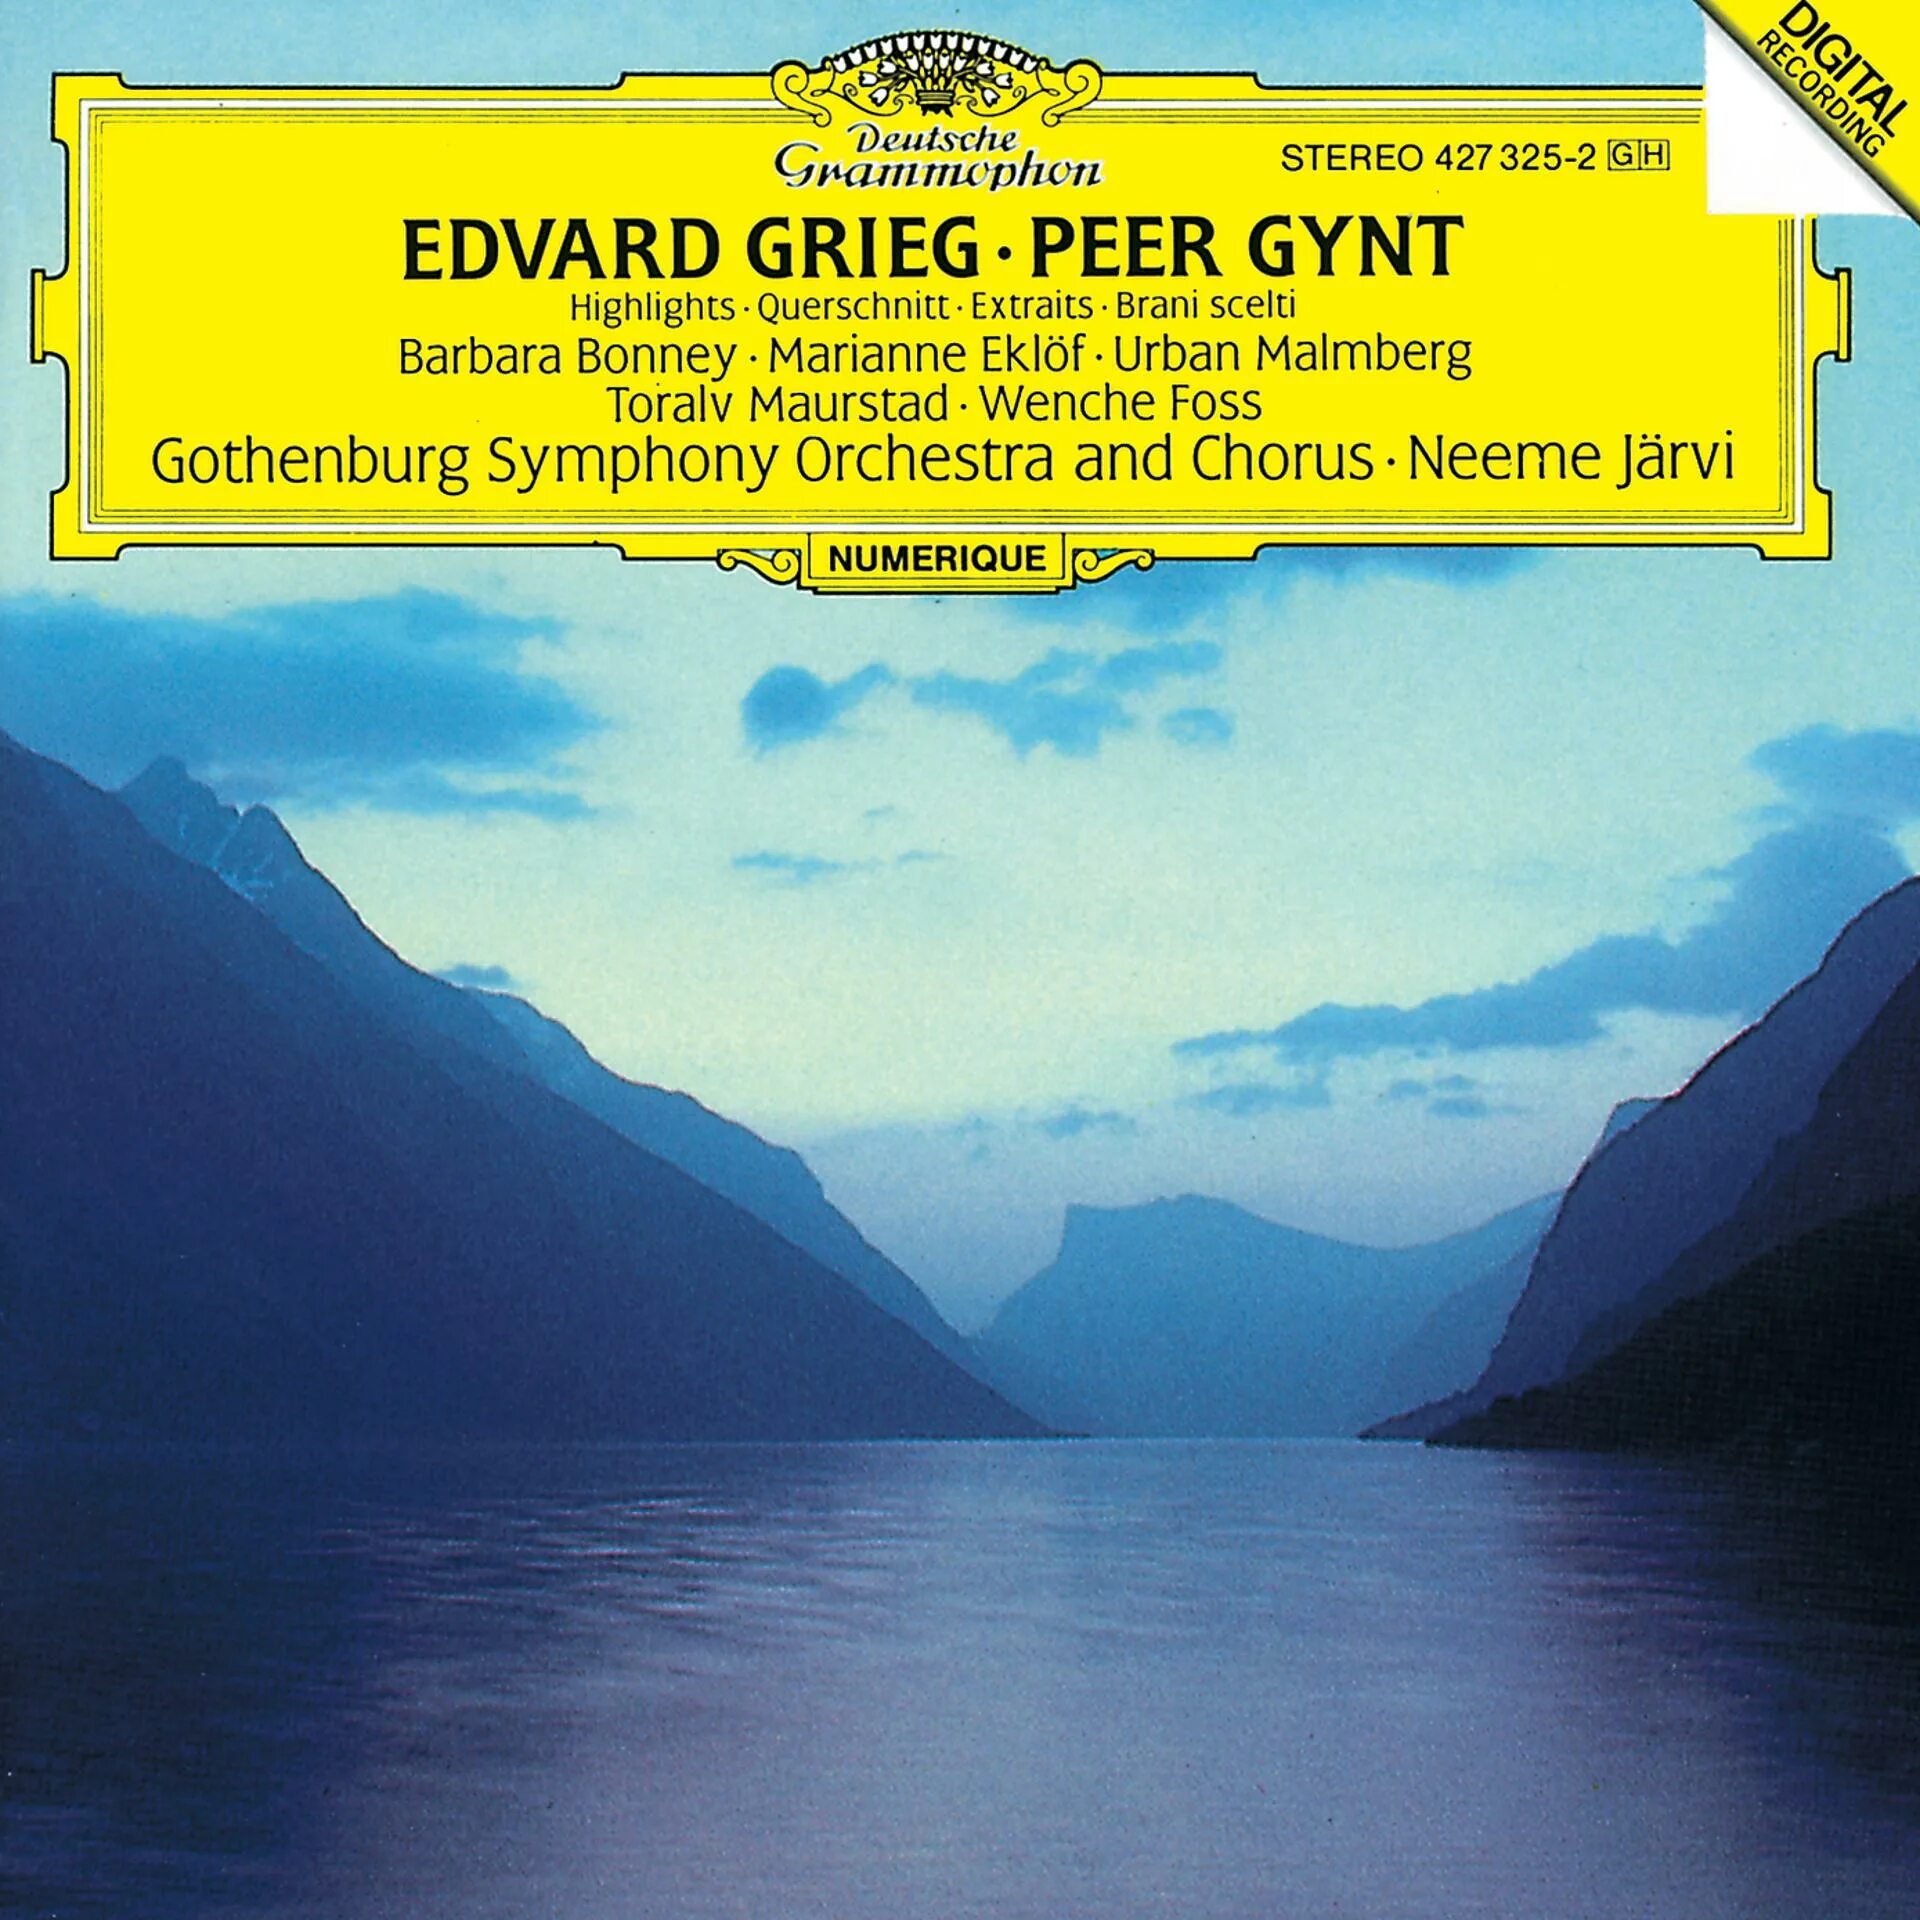 Grieg peer gynt. Peer Gynt. Edvard Grieg: "peer Gynt - morning mood". Peer Gynt Suite no 1 Greig.